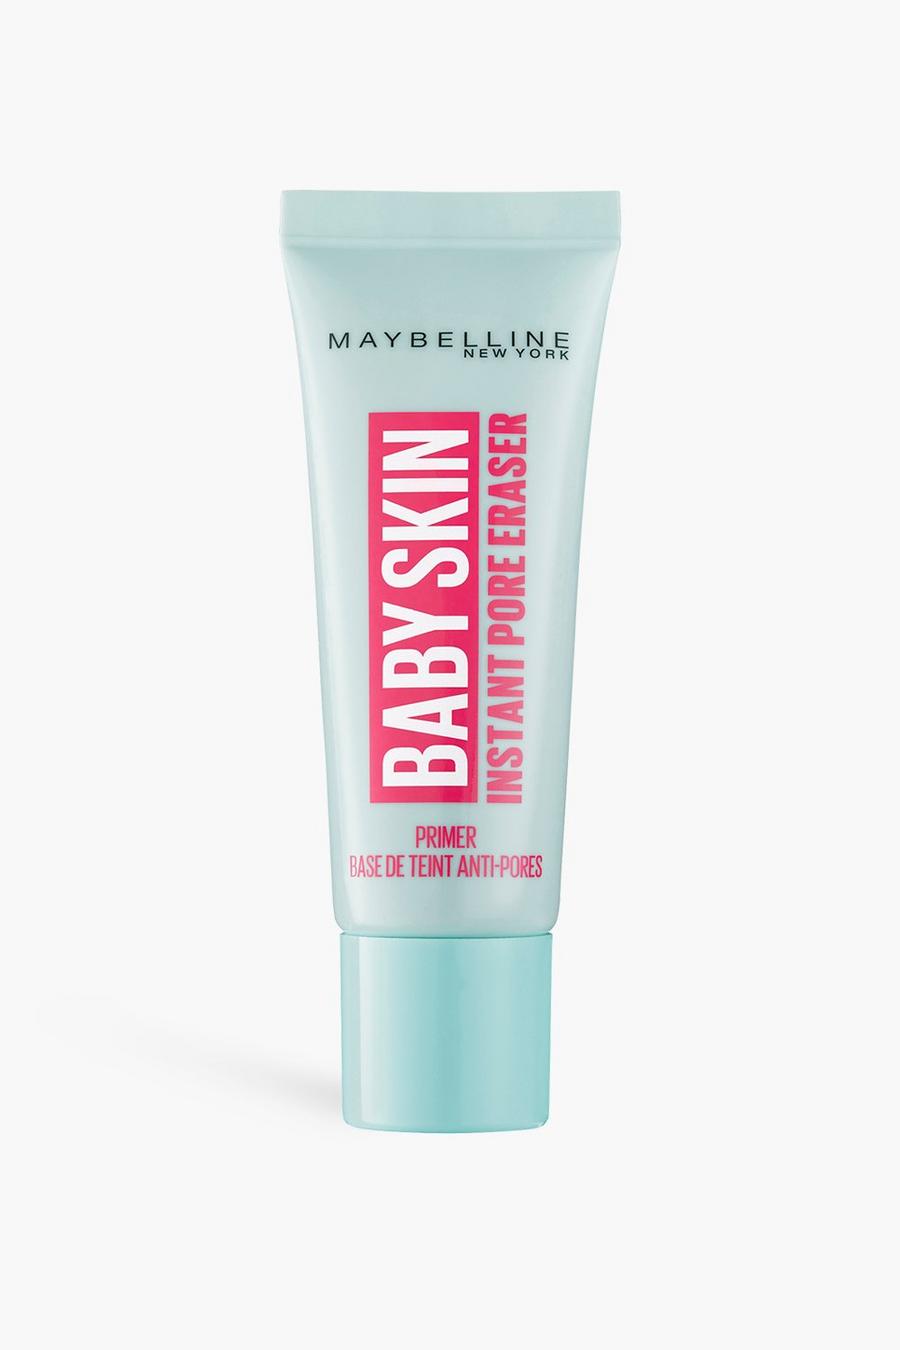 Maybelline - Base de teint anti pores - 22ml, Couleur chair hautfarben